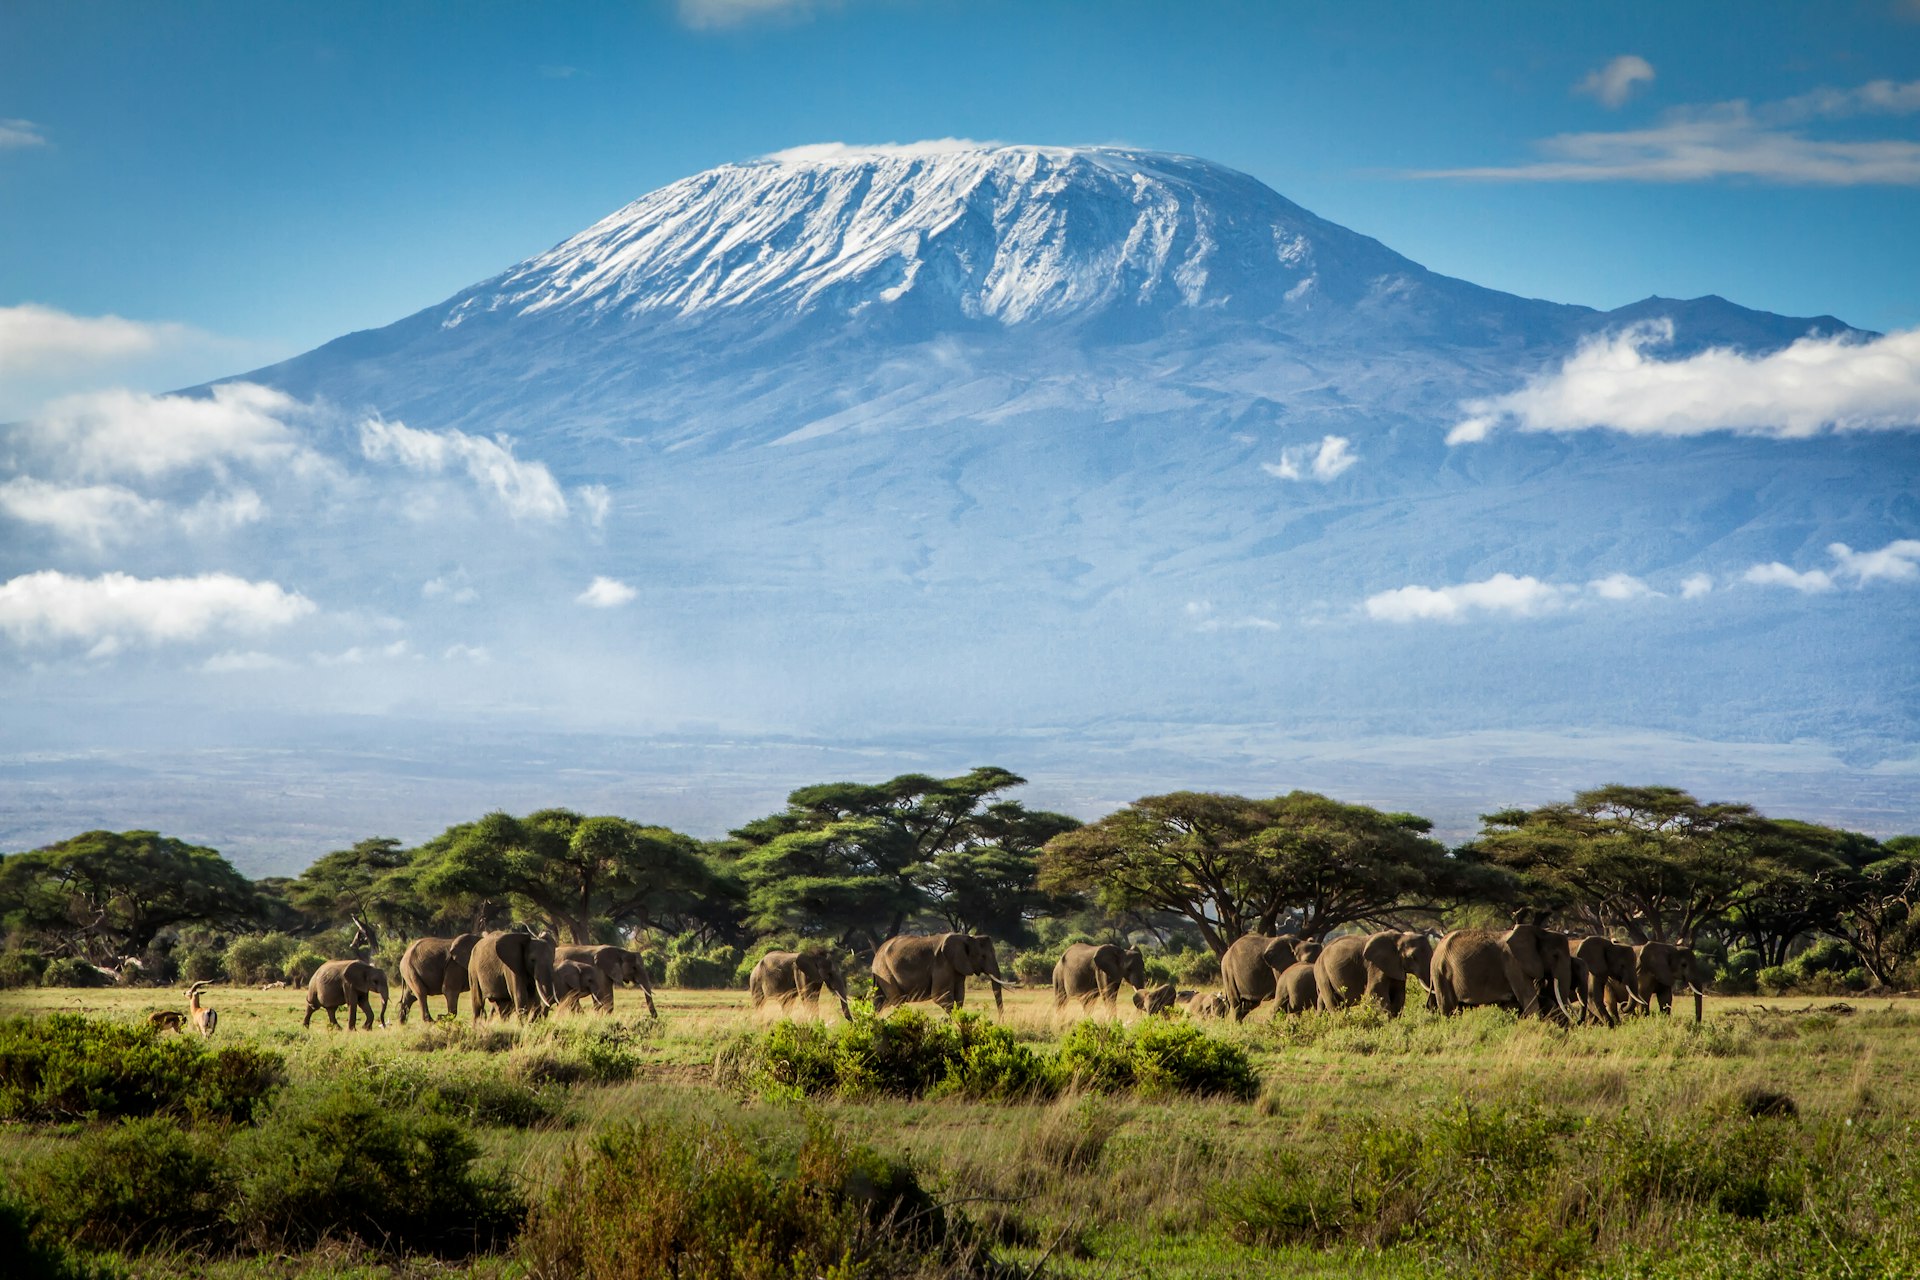 A herd of elephants in front of Mount Kilimanjaro